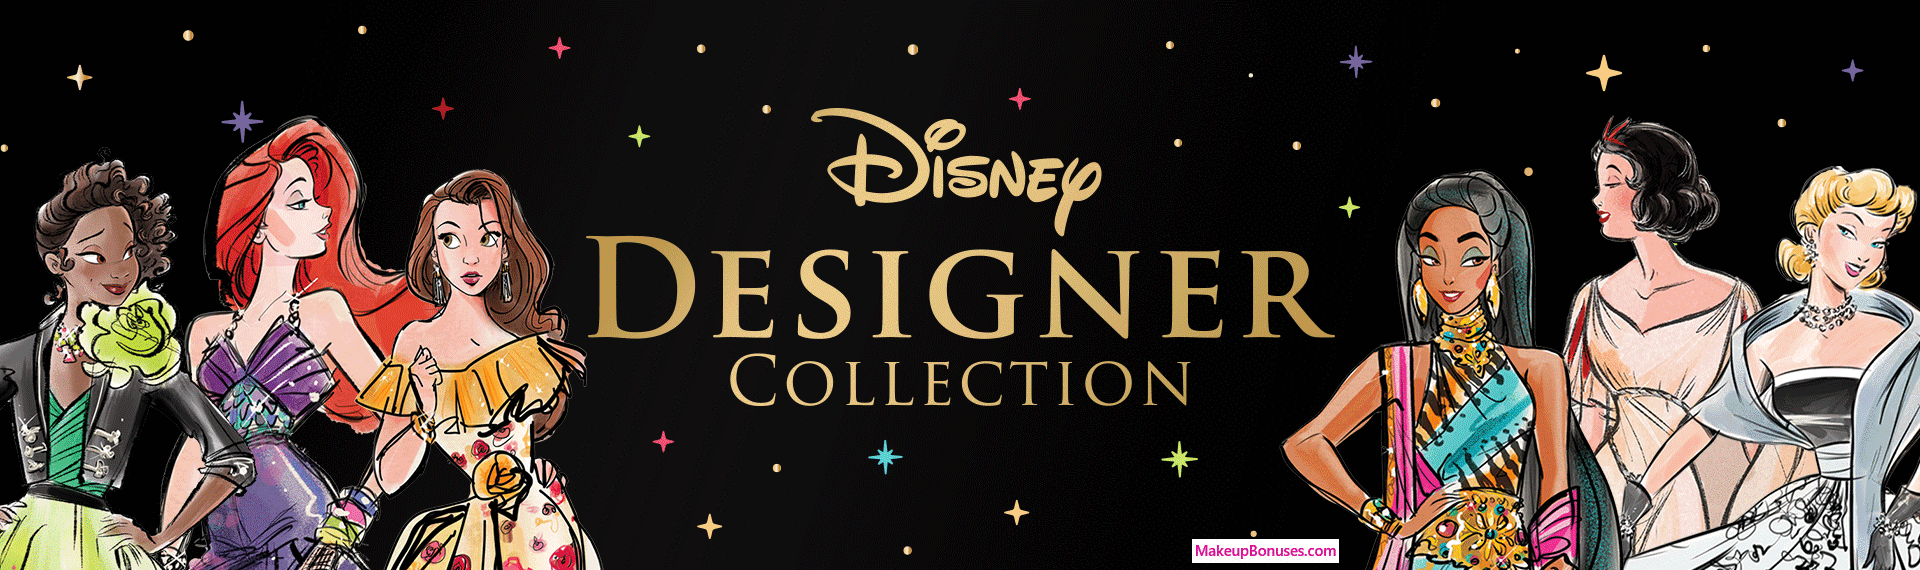 Disney Designer Collection - MakeupBonuses.com #ColourPopCosmetics #ColourPopCo